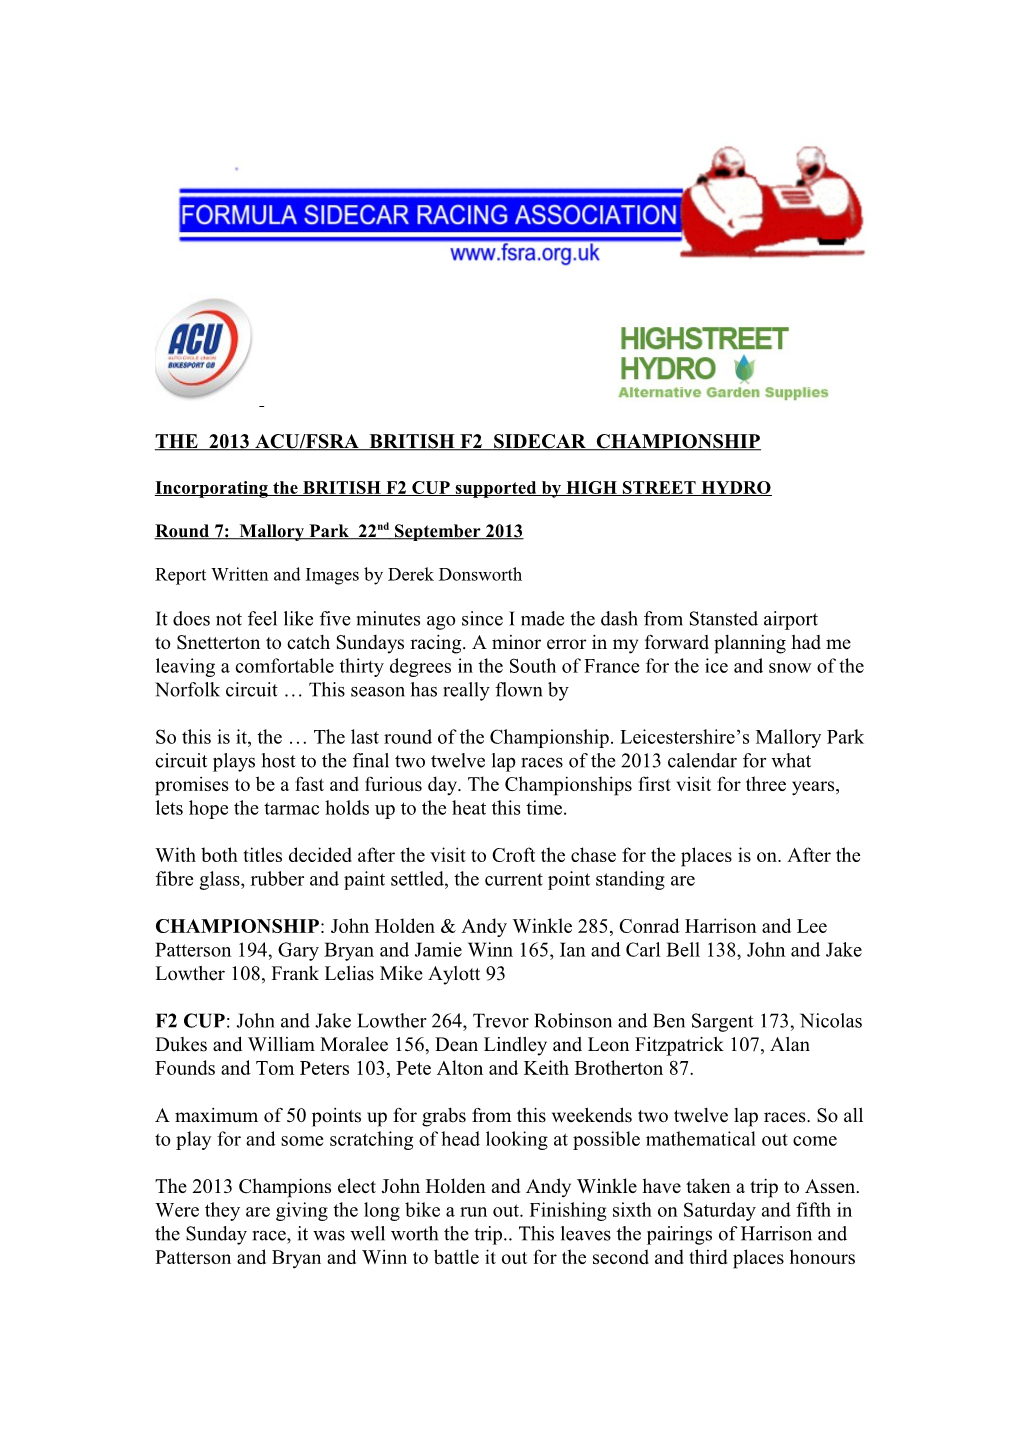 The 2013 Acu/Fsra British F2 Sidecar Championship